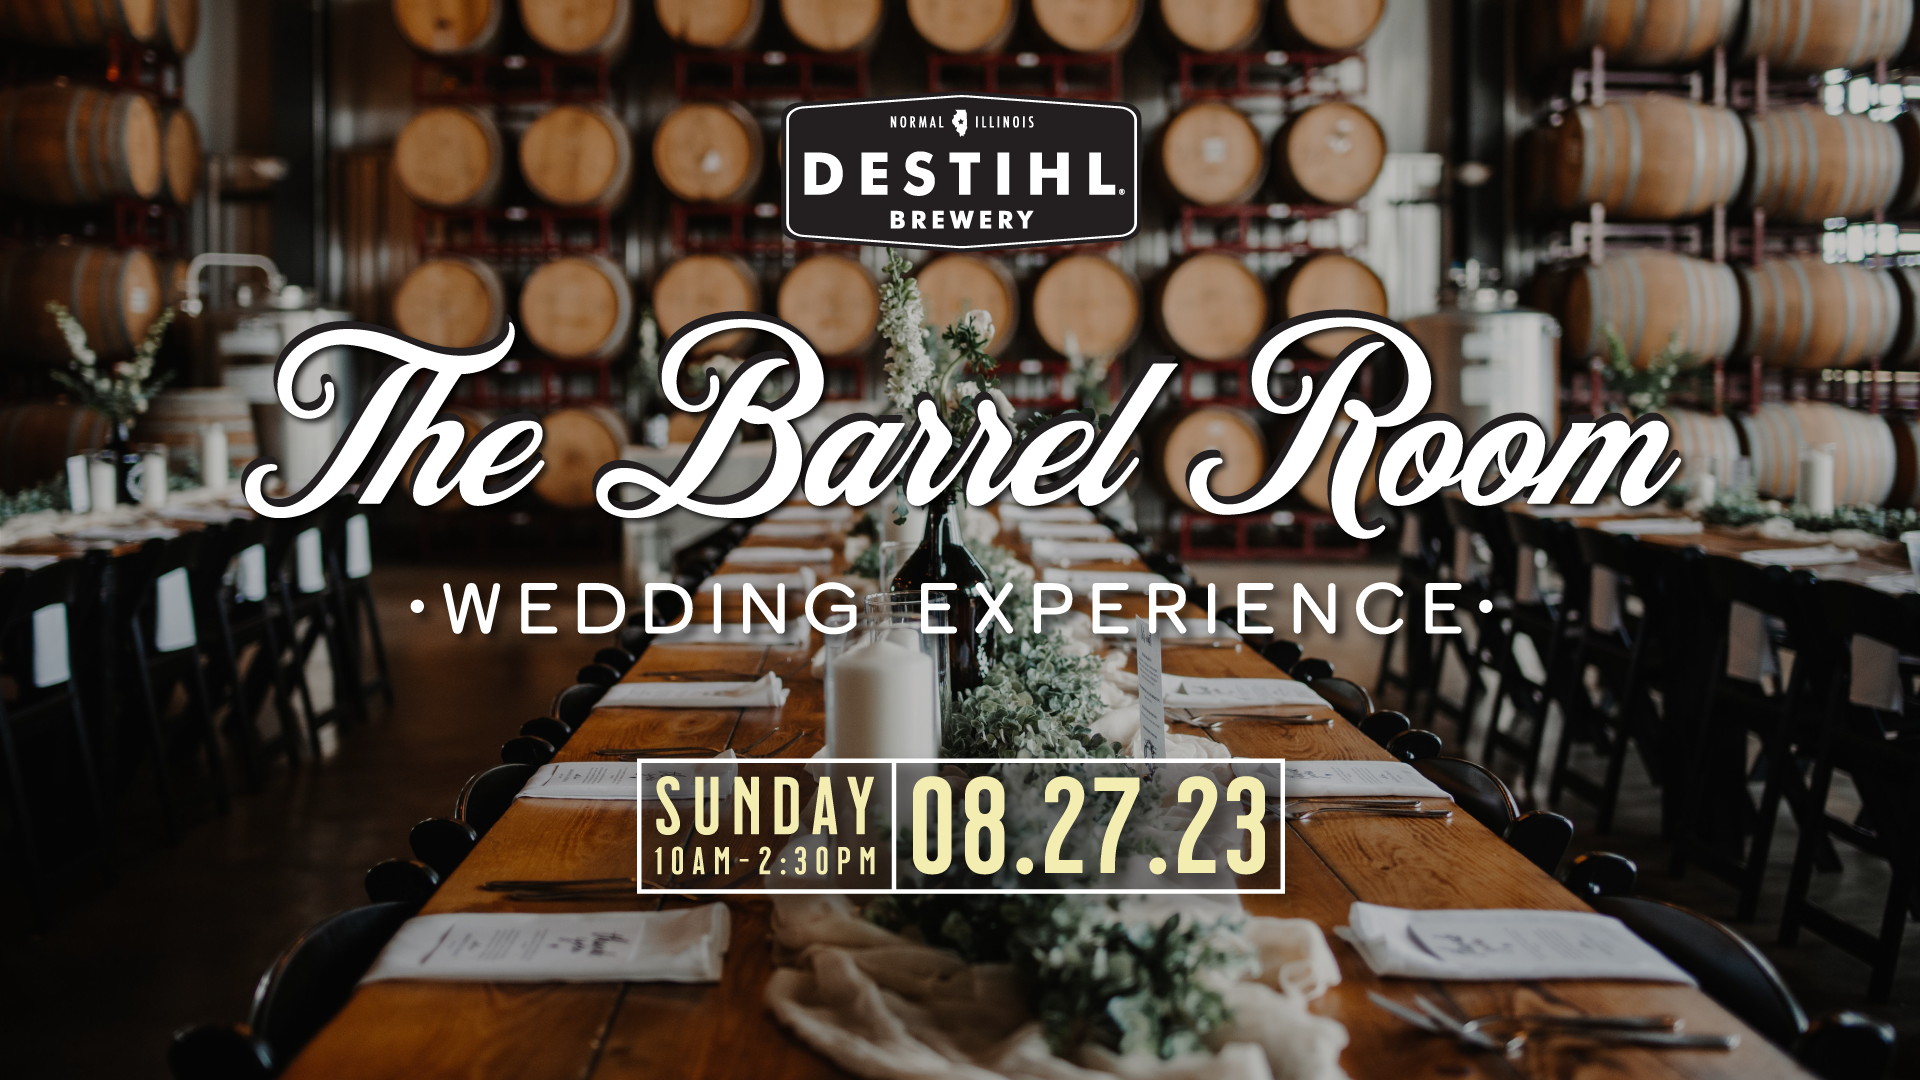 The Barrel Room Wedding Experience